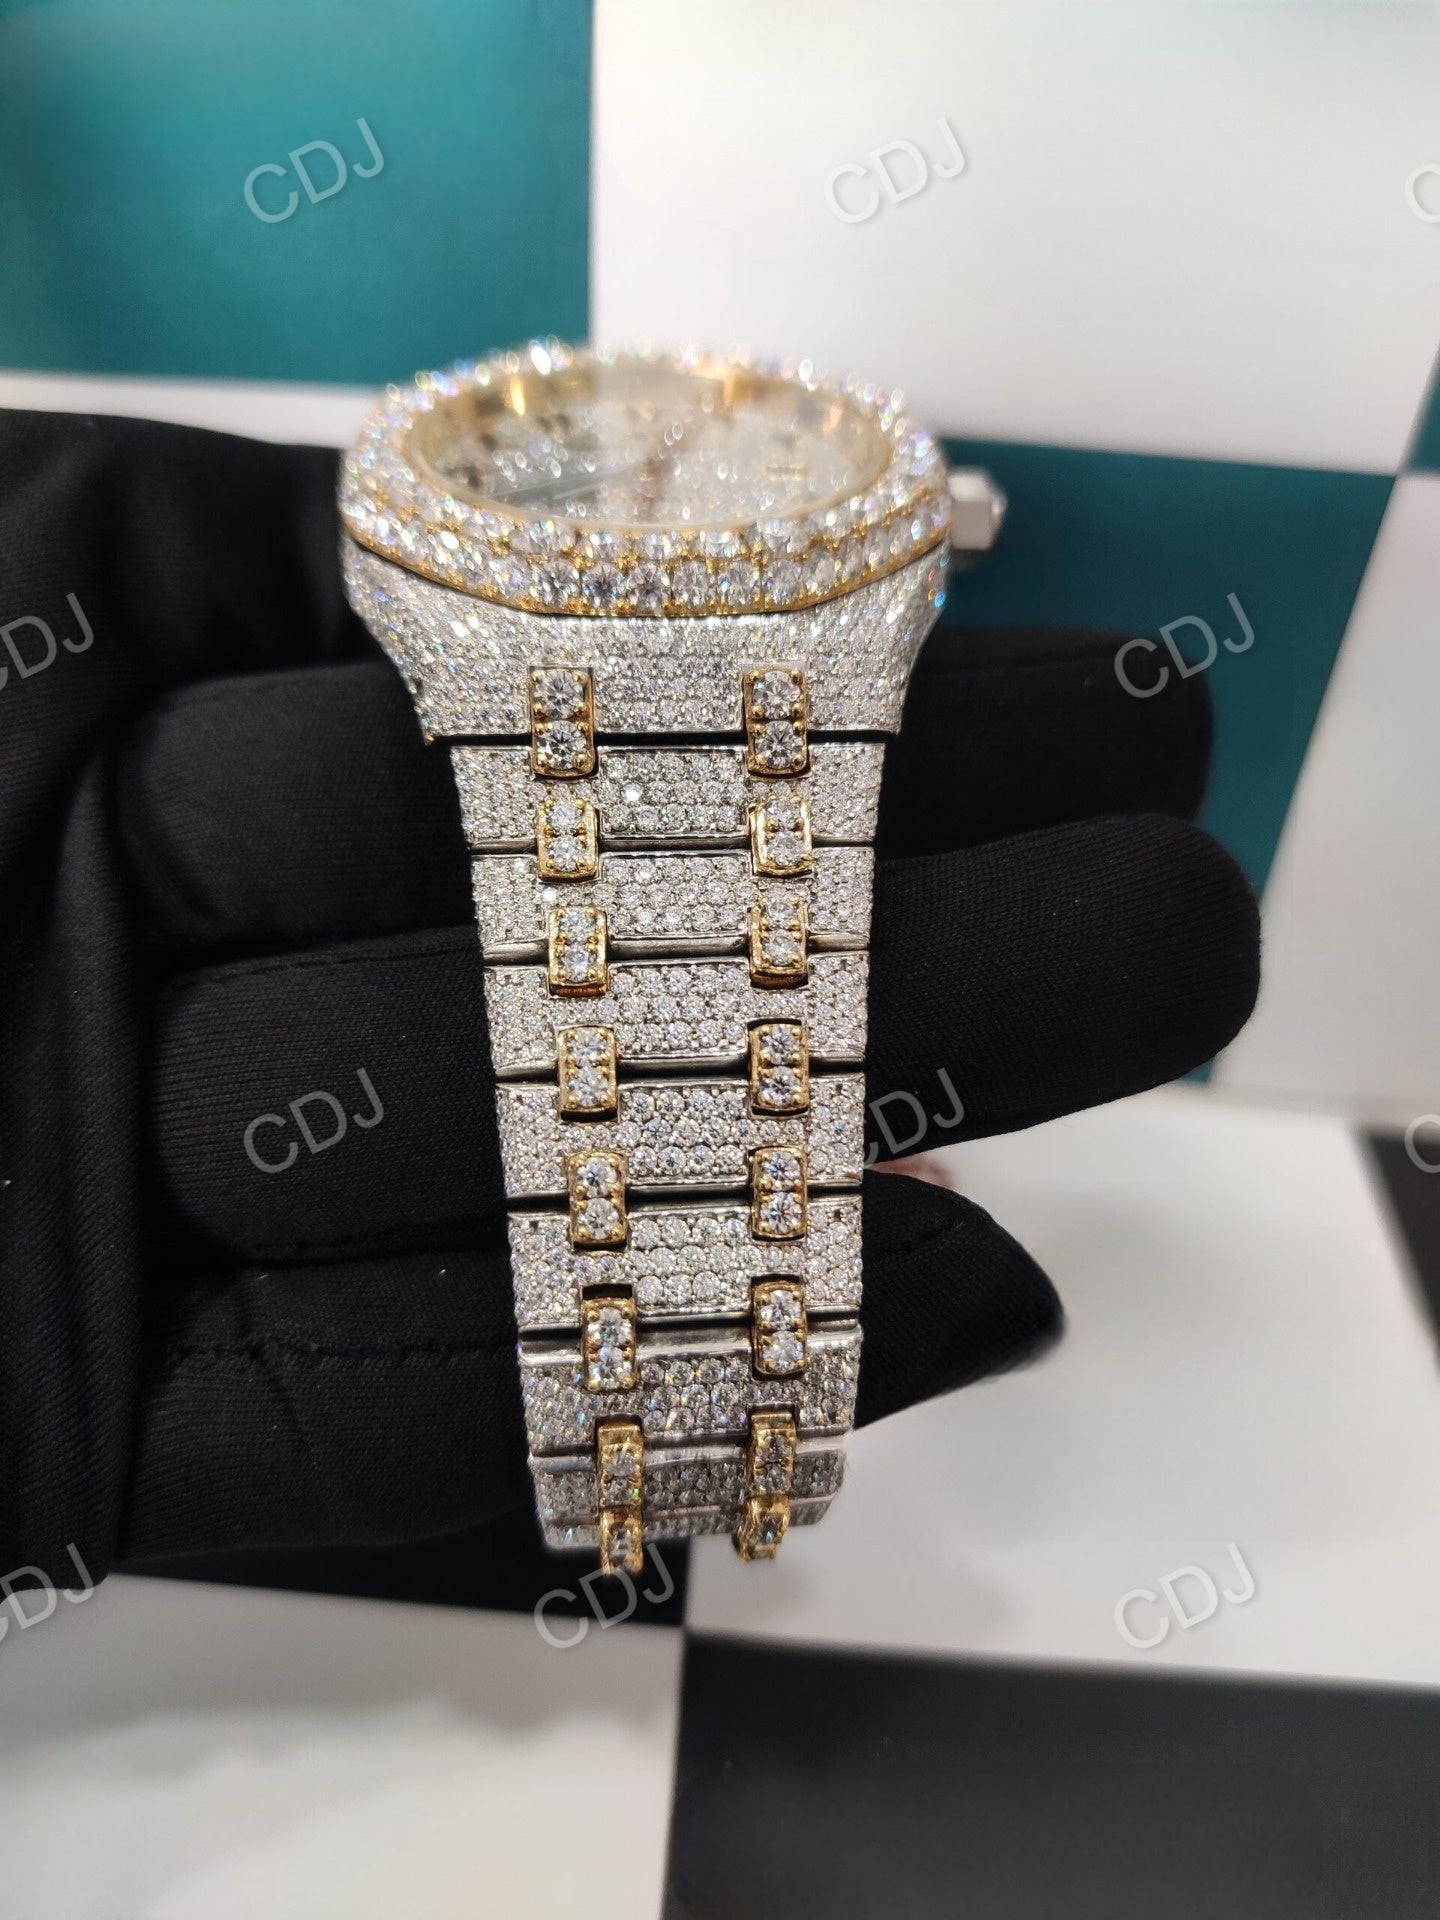 Classic Lab Grown Luxury Design Iced Out Men's Full Diamond Wrist Watch Yellow Gold Plated Swiss Watch CVD Diamond Watch